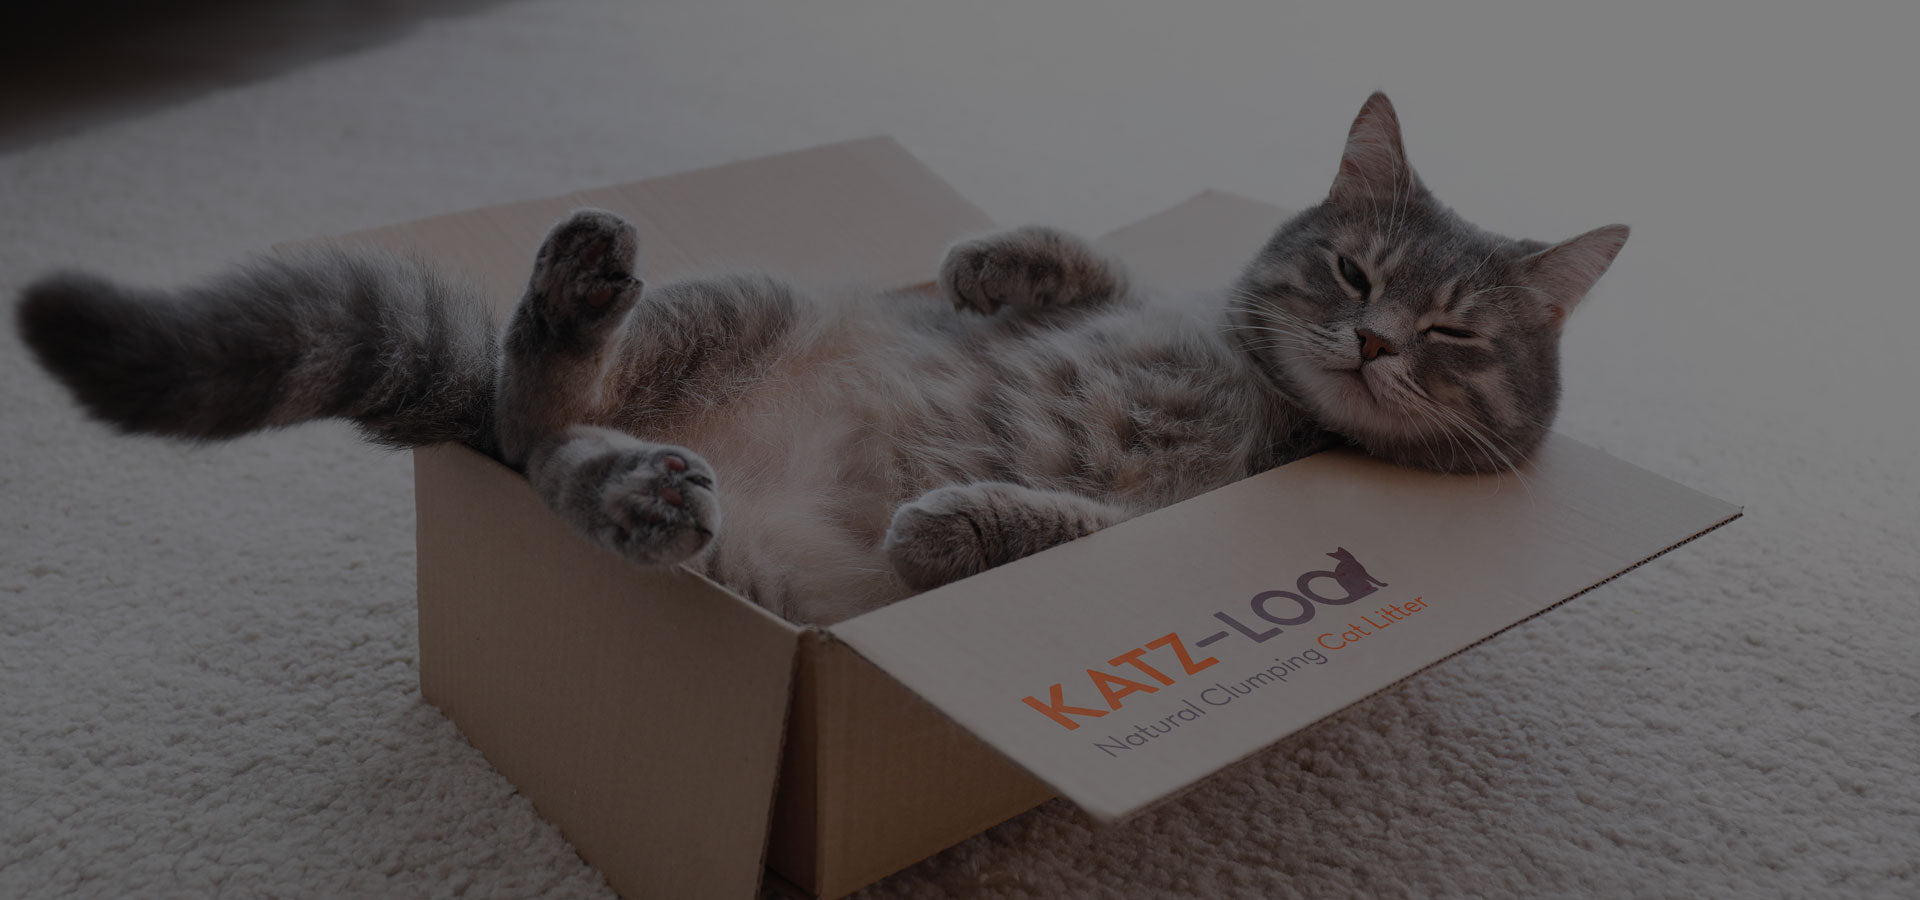 Katz-Loo cat in box